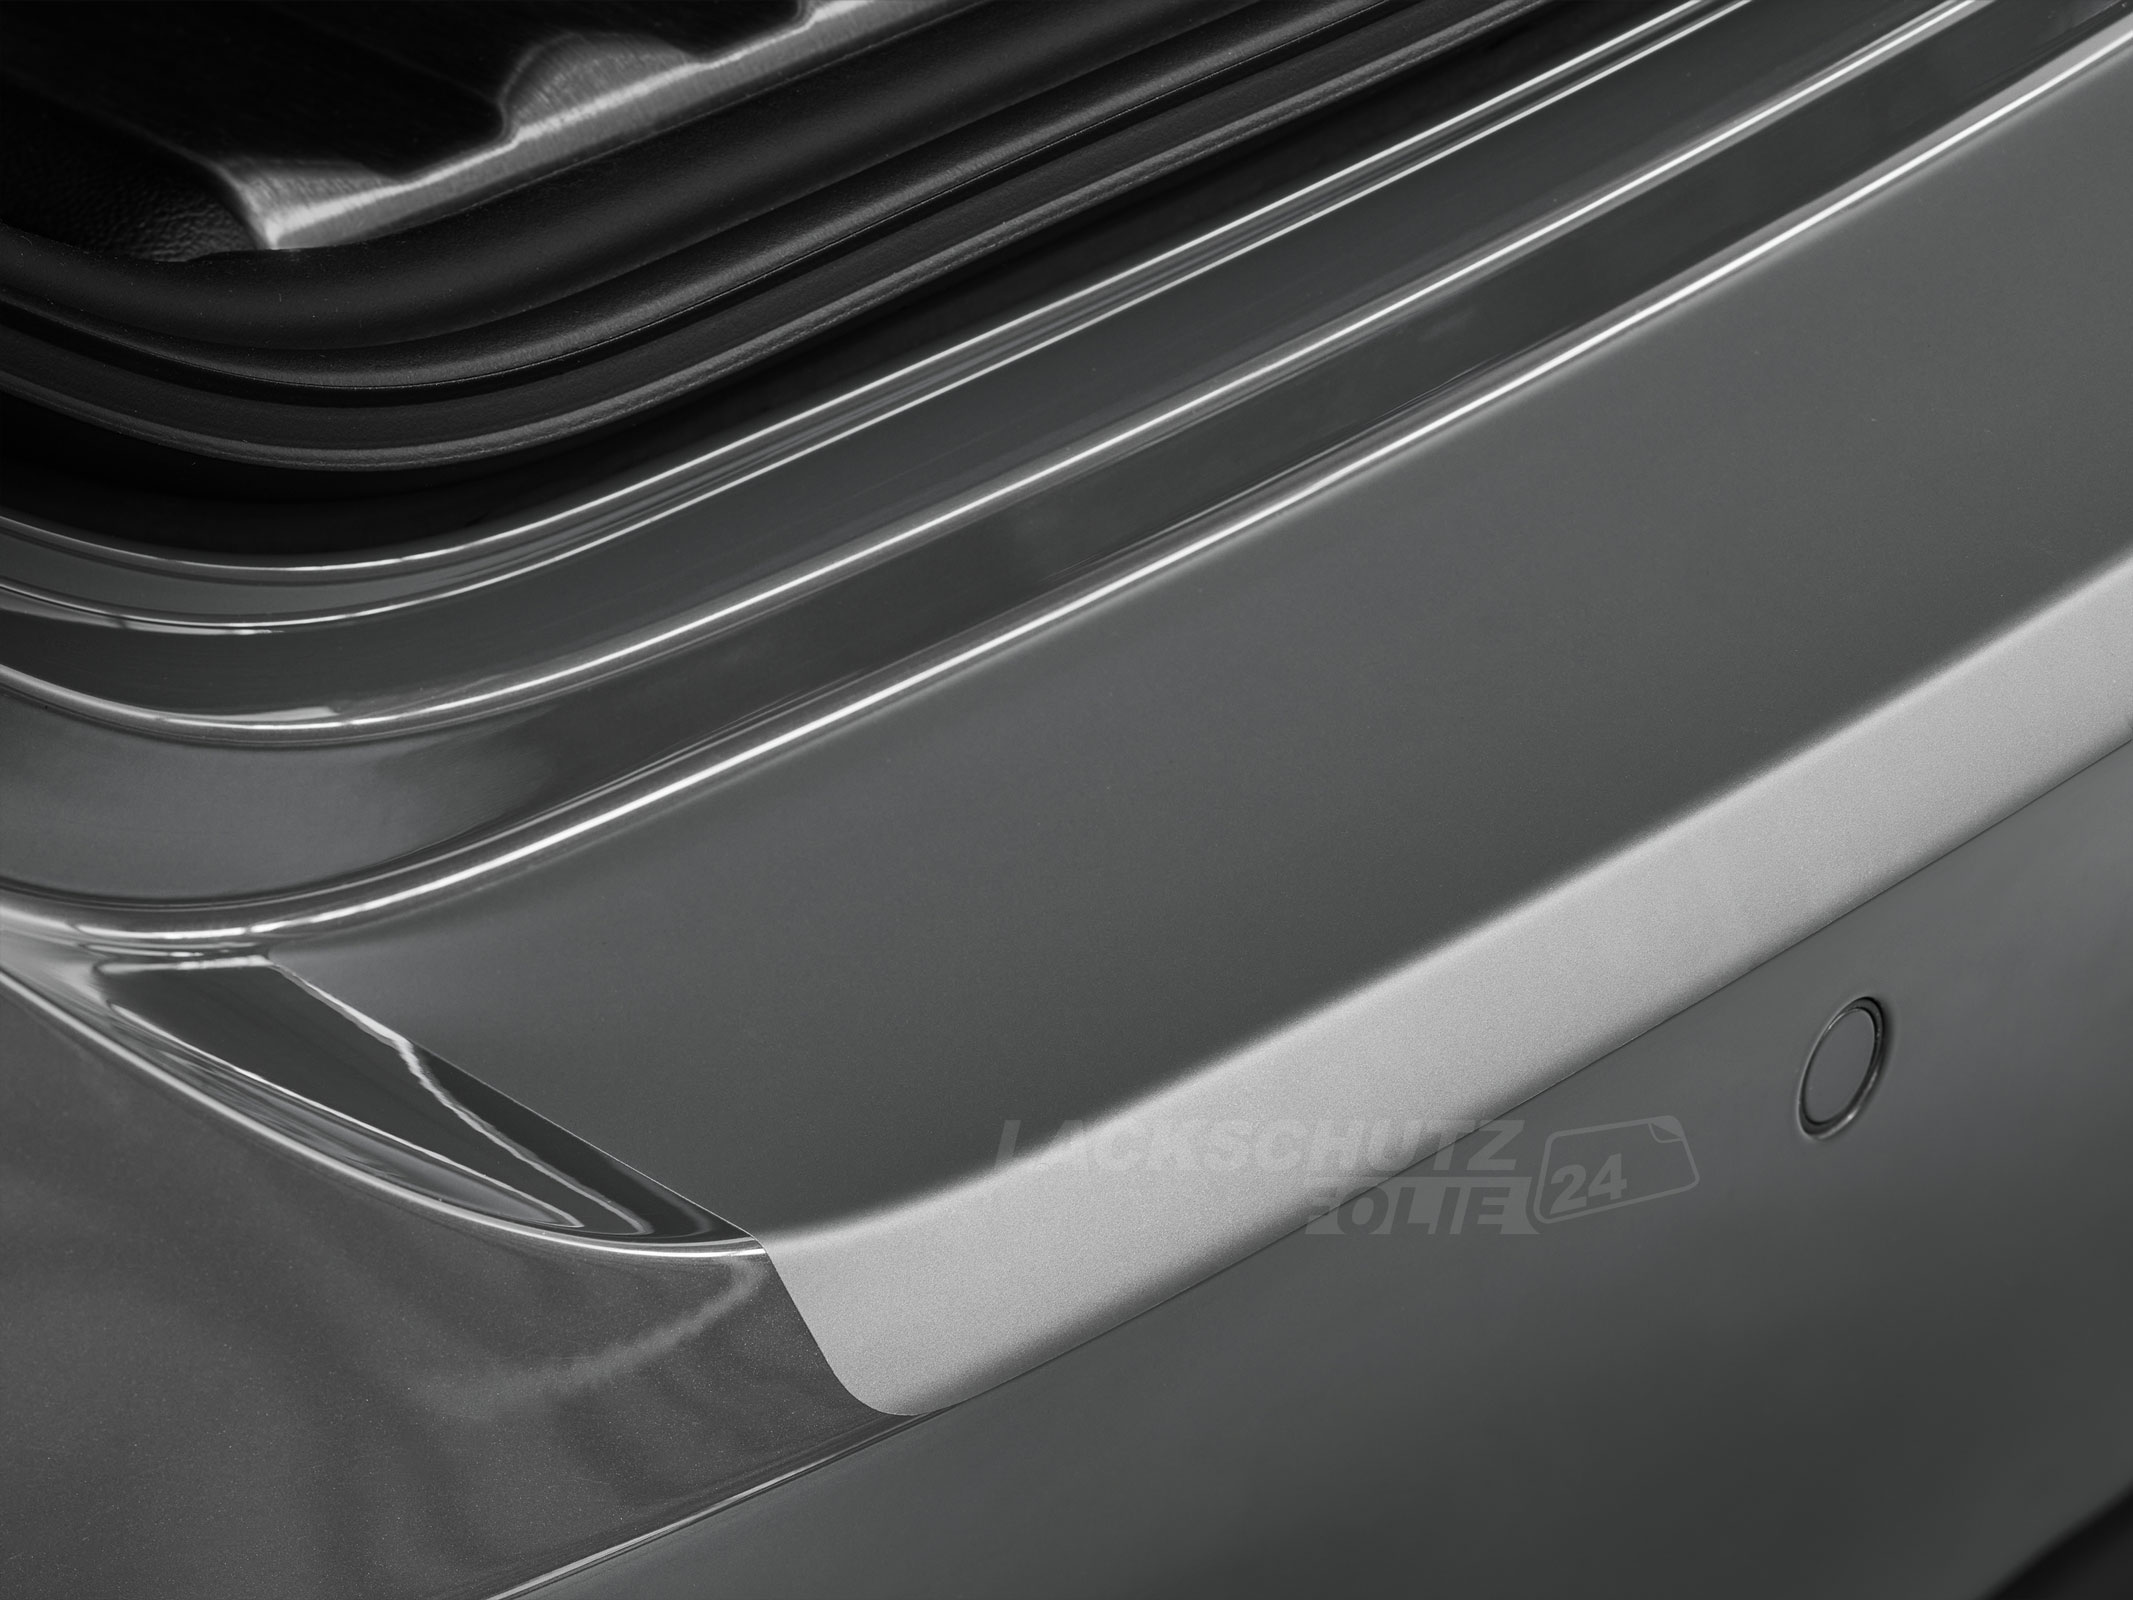 Ladekantenschutzfolie - Transparent Glatt MATT 110 µm stark  für Honda Civic 9. Generation, BJ 2012-2015